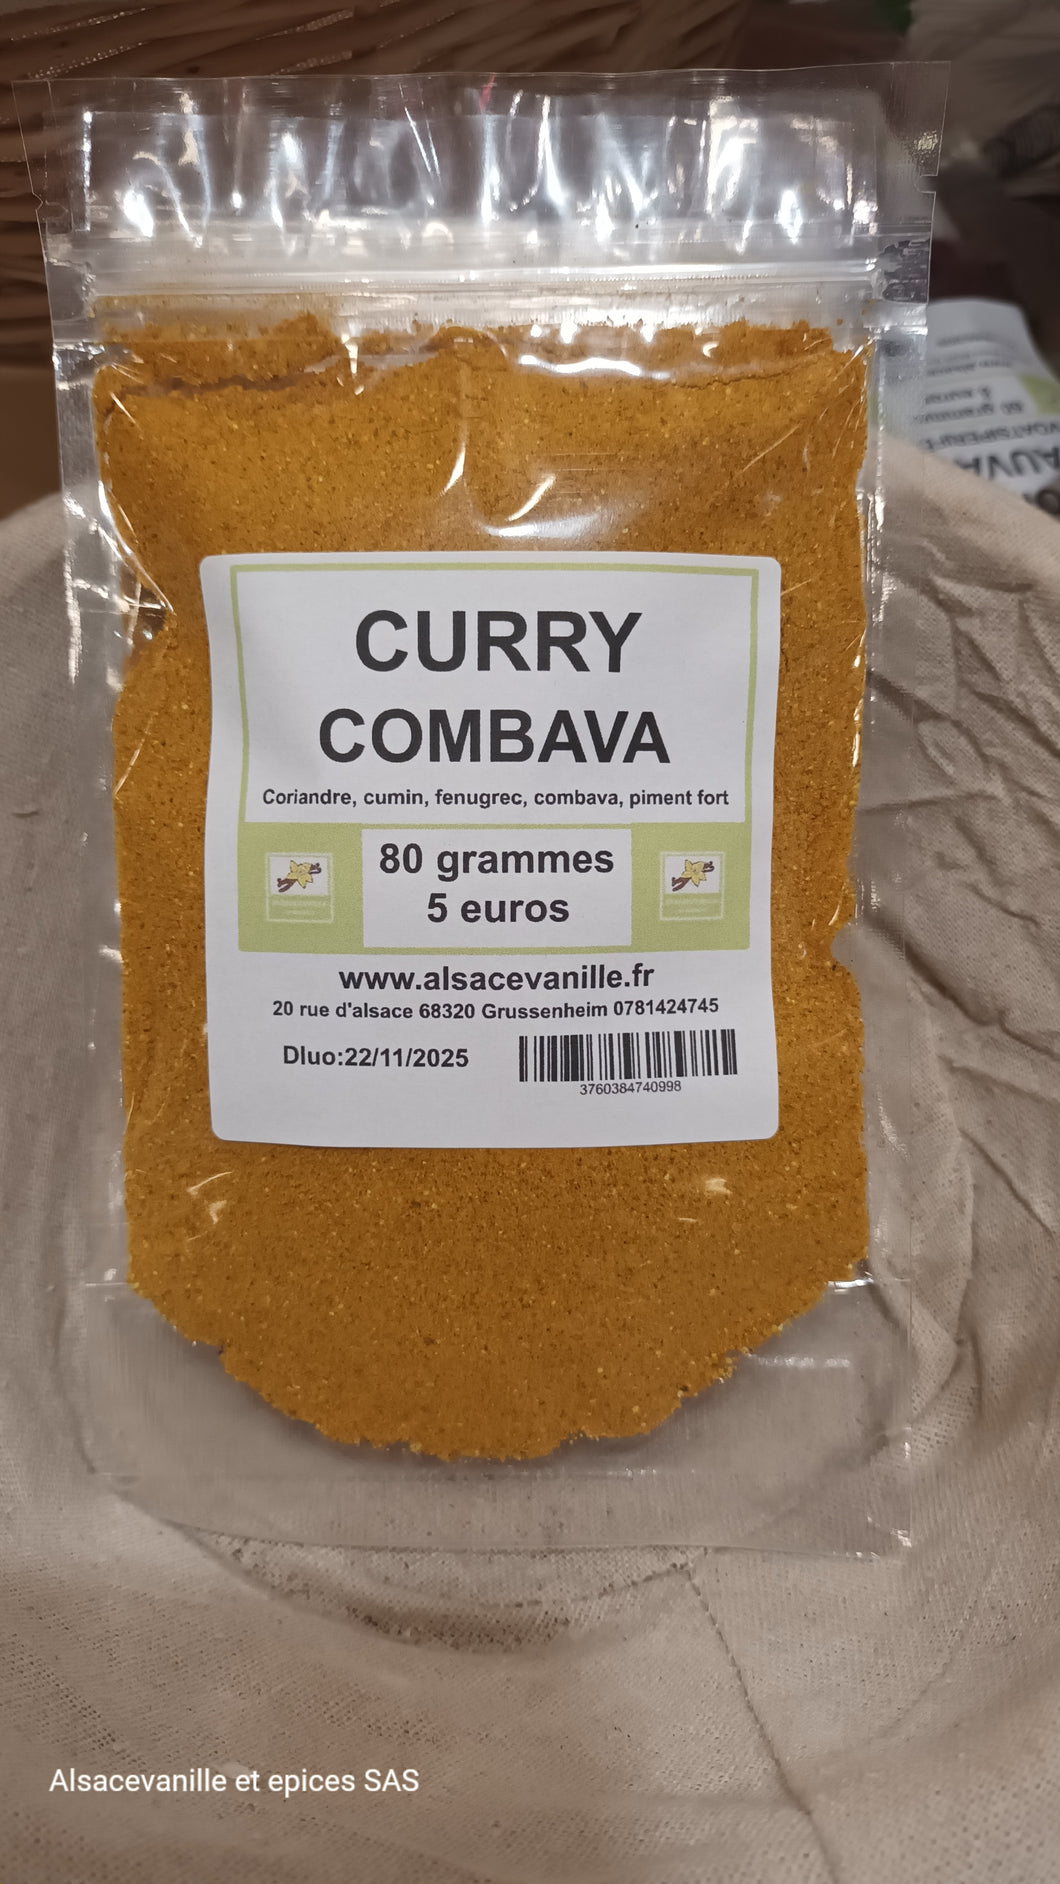 Curry au combava 80 grammes